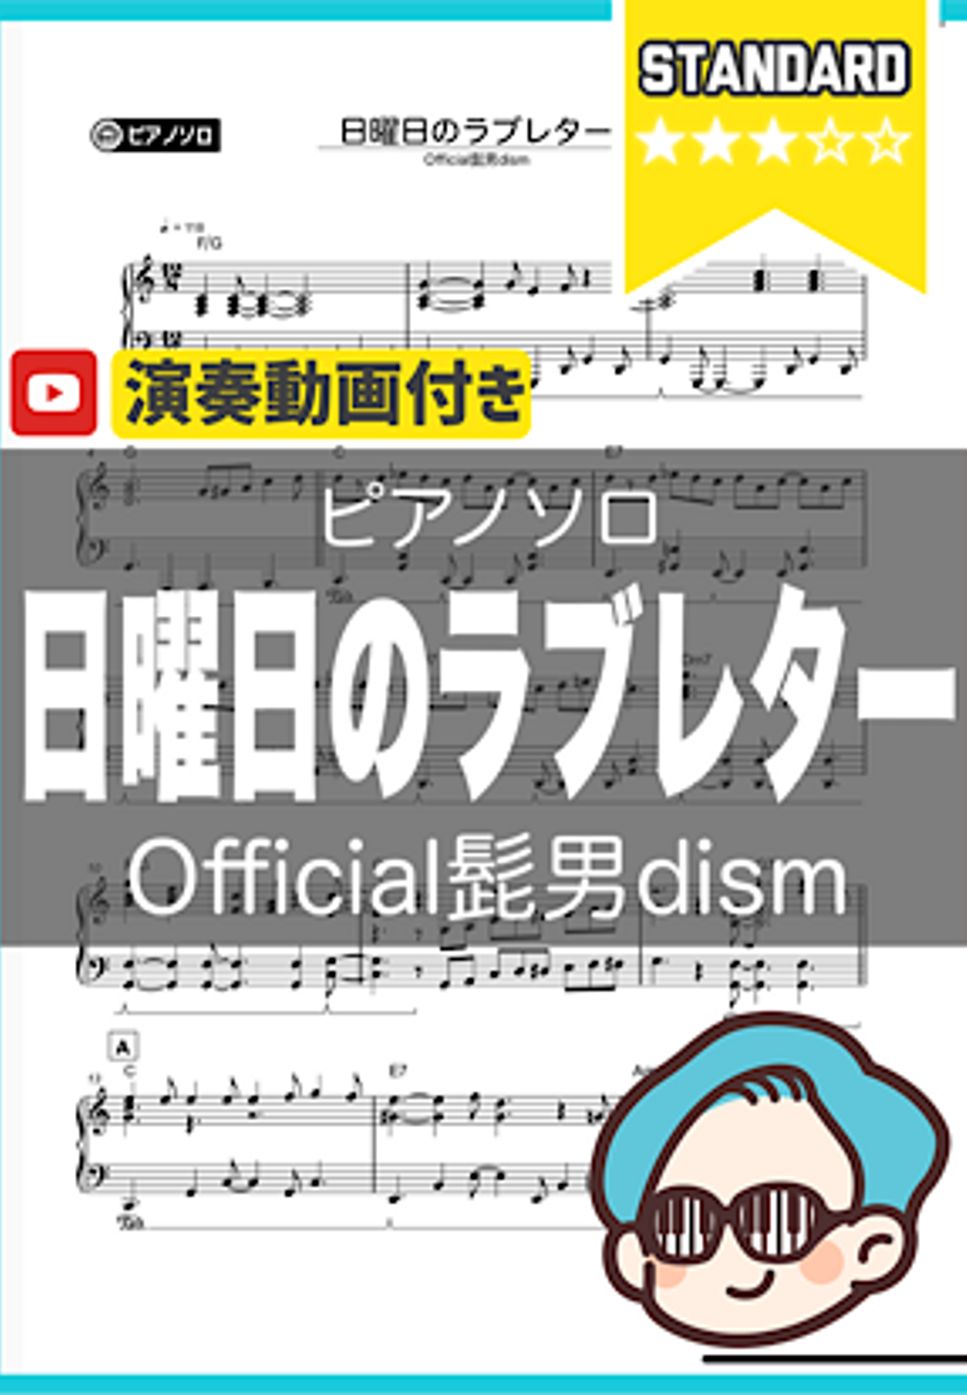 Official髭男dism - 日曜日のラブレター by シータピアノ